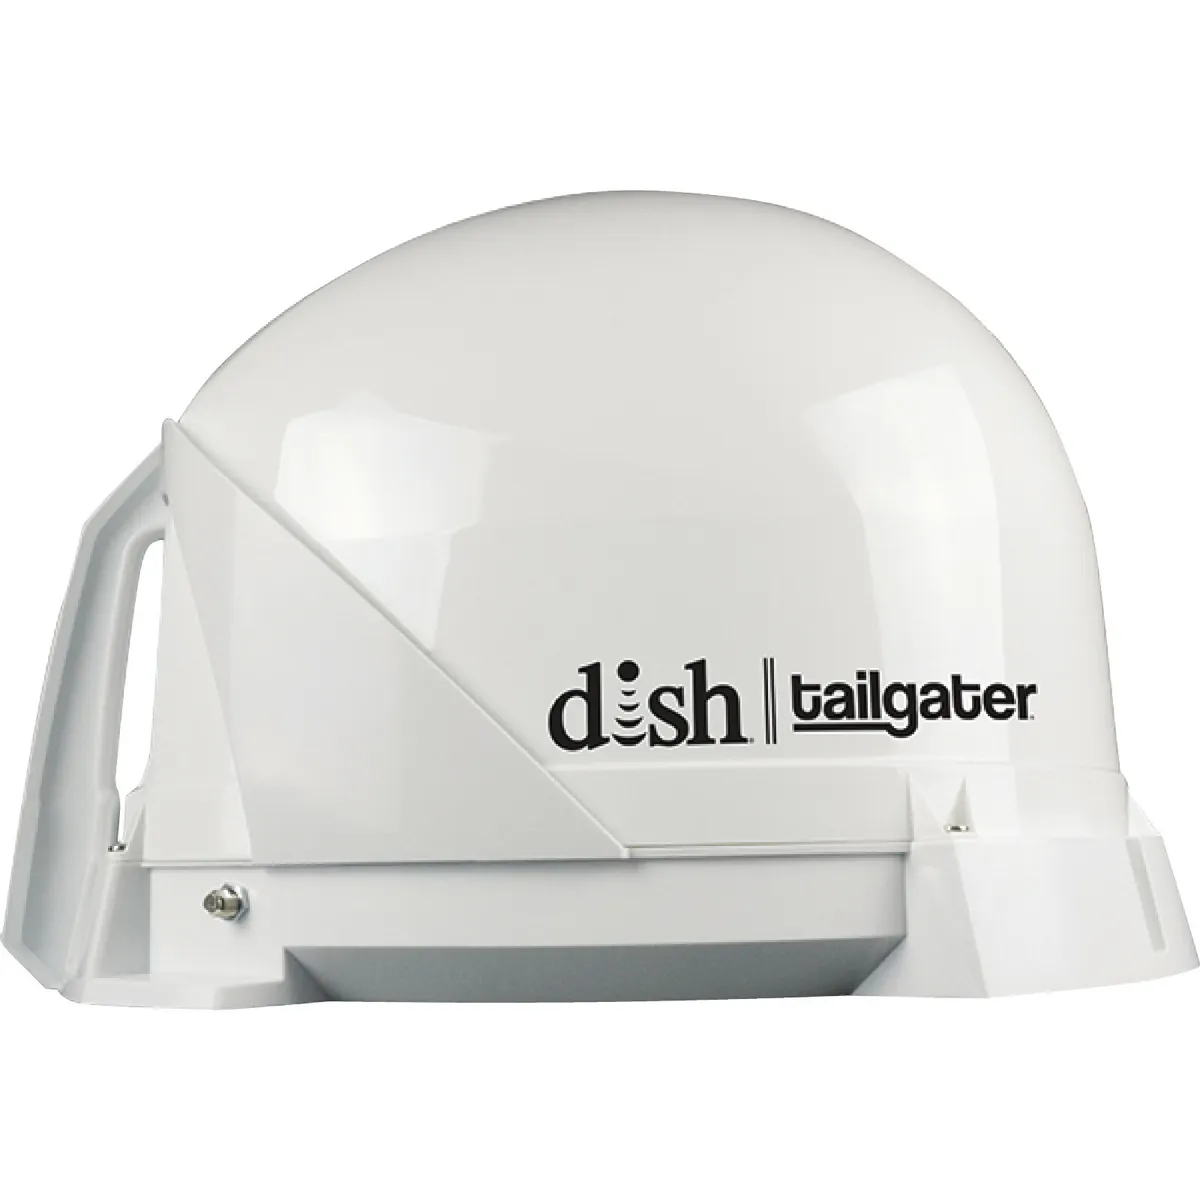 DISH Tailgater VQ4400